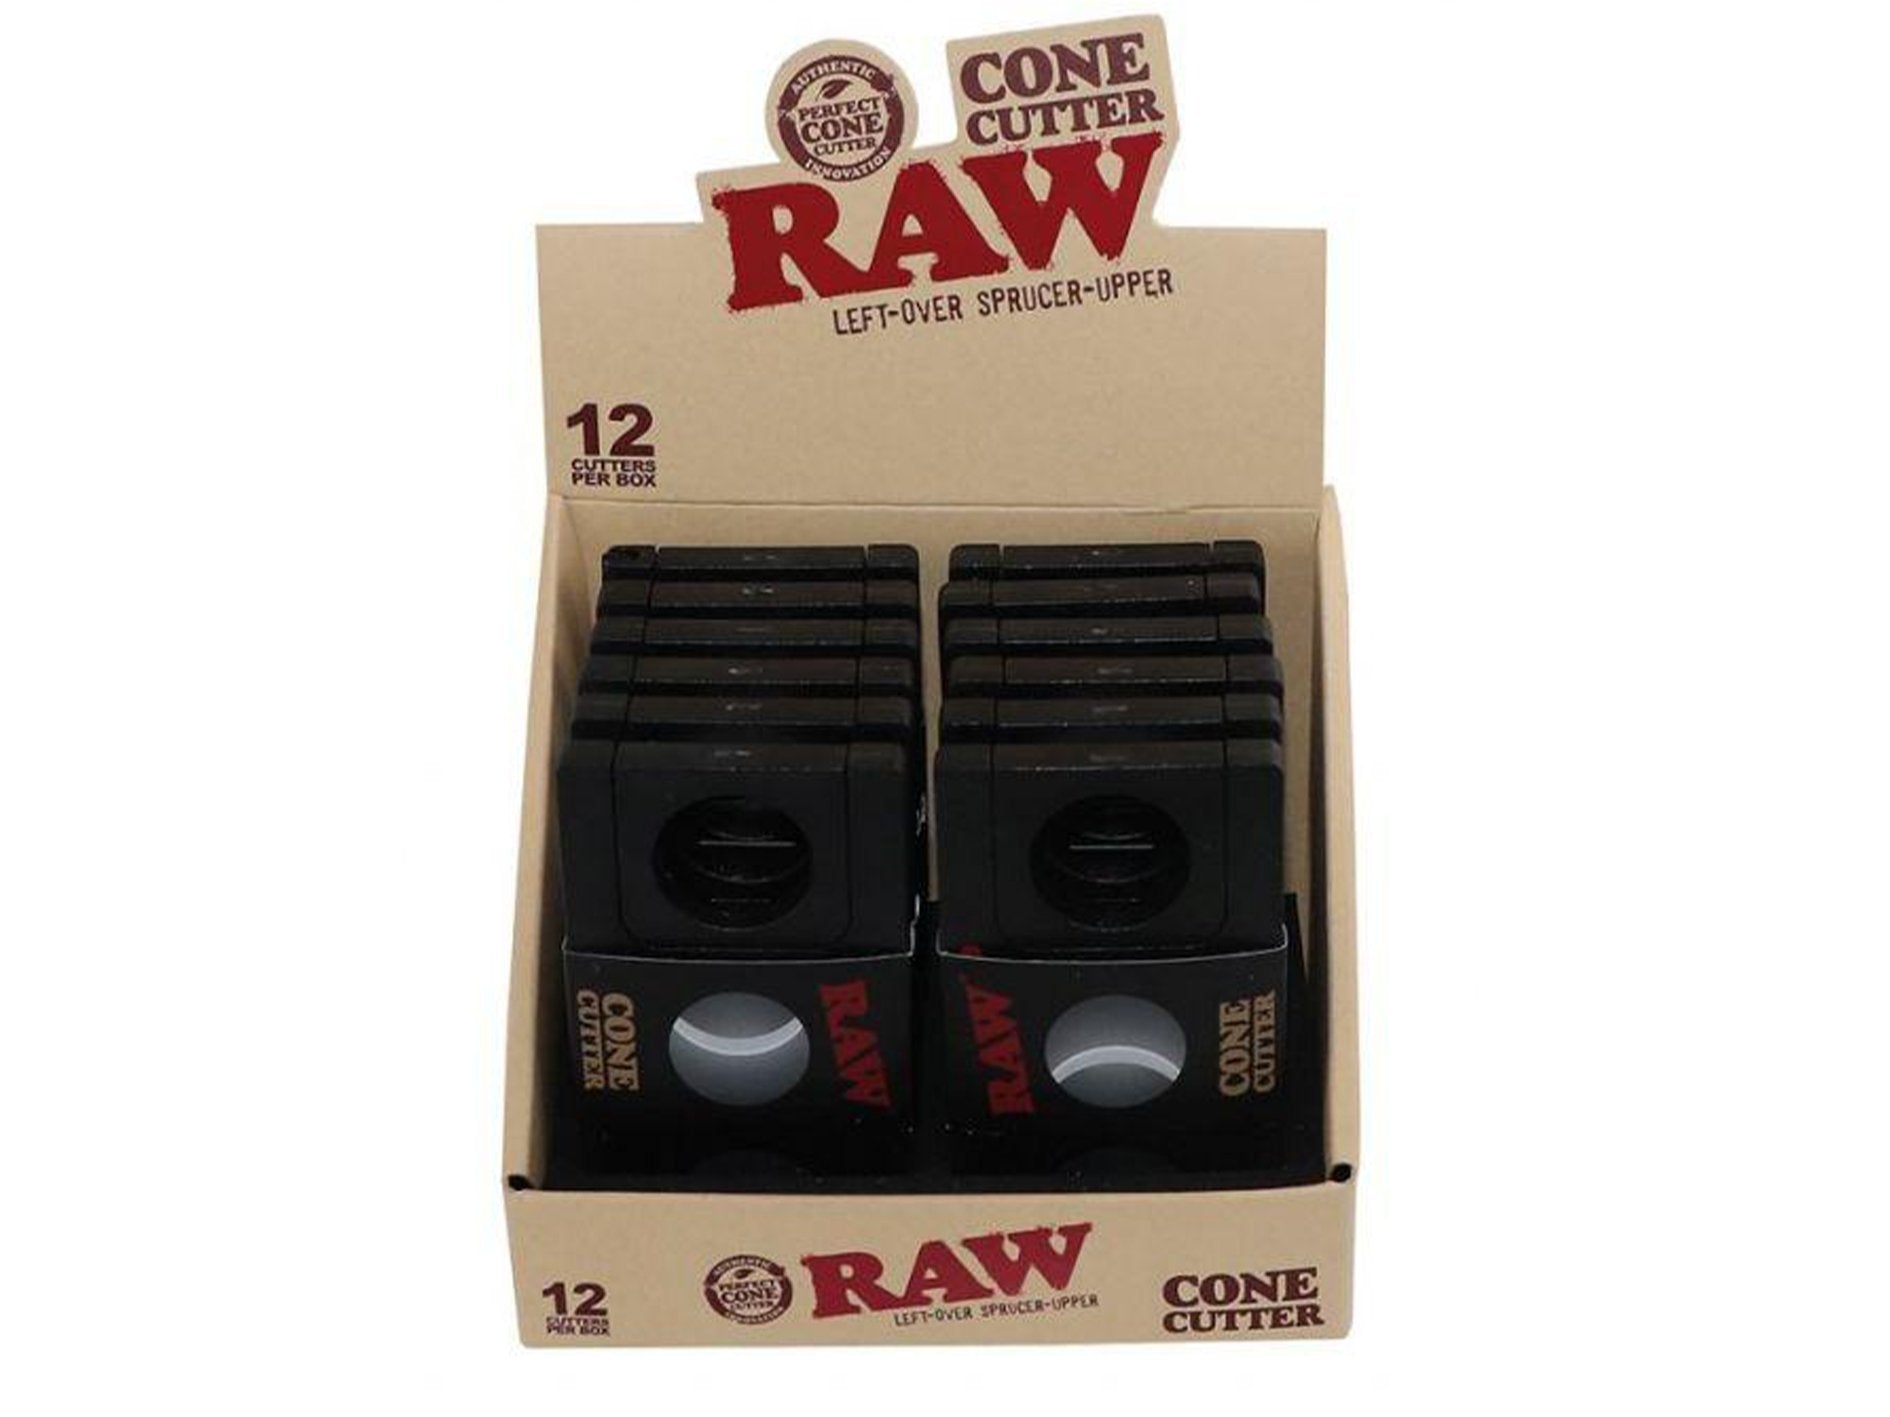 RAW Cone Cutter 12/Display - VIR Wholesale